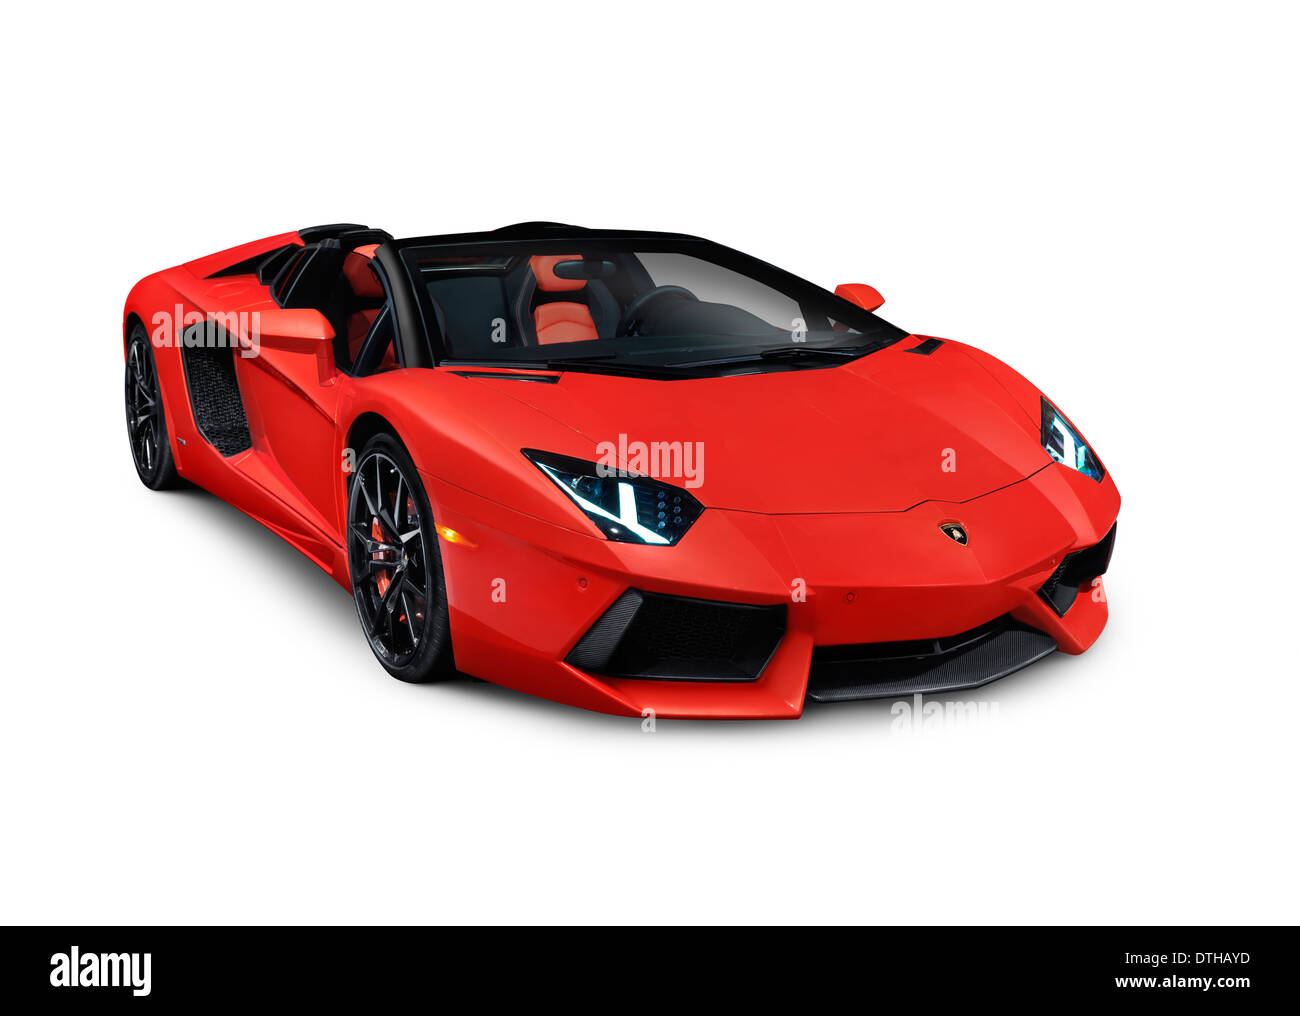 Lizenz und Drucke bei MaximImages.com - Lamborghini Luxus-Sportwagen, Supersportwagen, Automobil Stock Foto. Stockfoto